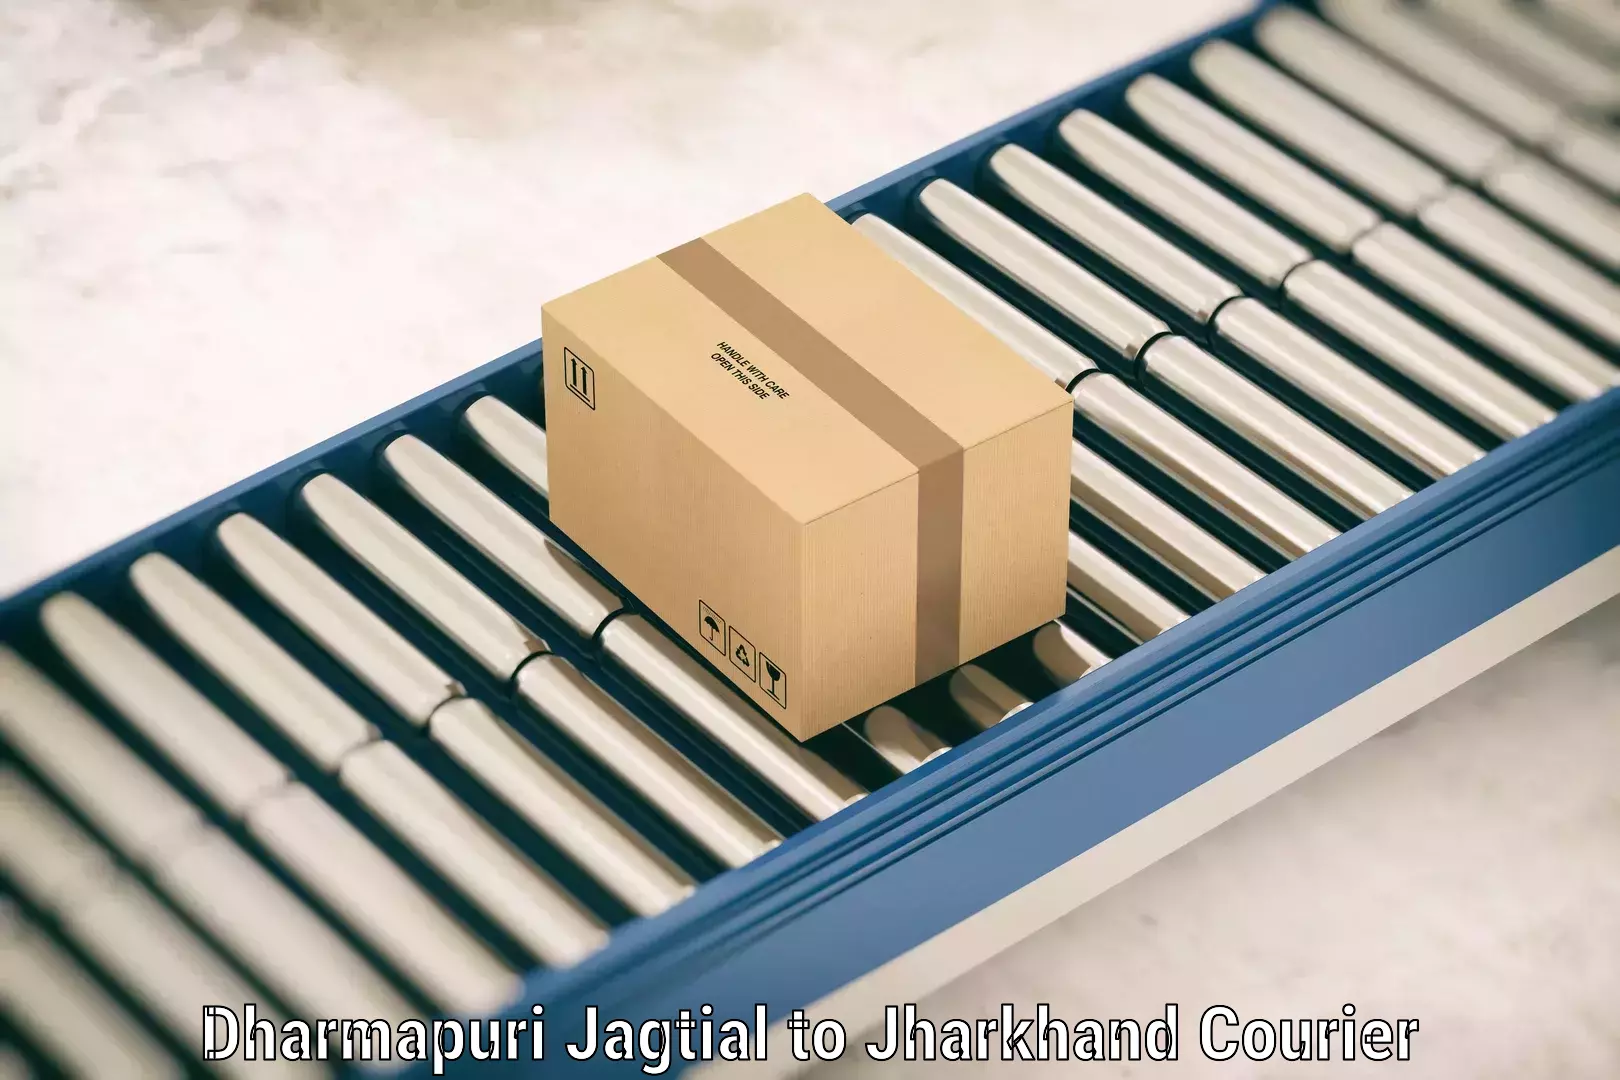 Instant baggage transport quote Dharmapuri Jagtial to Tandwa